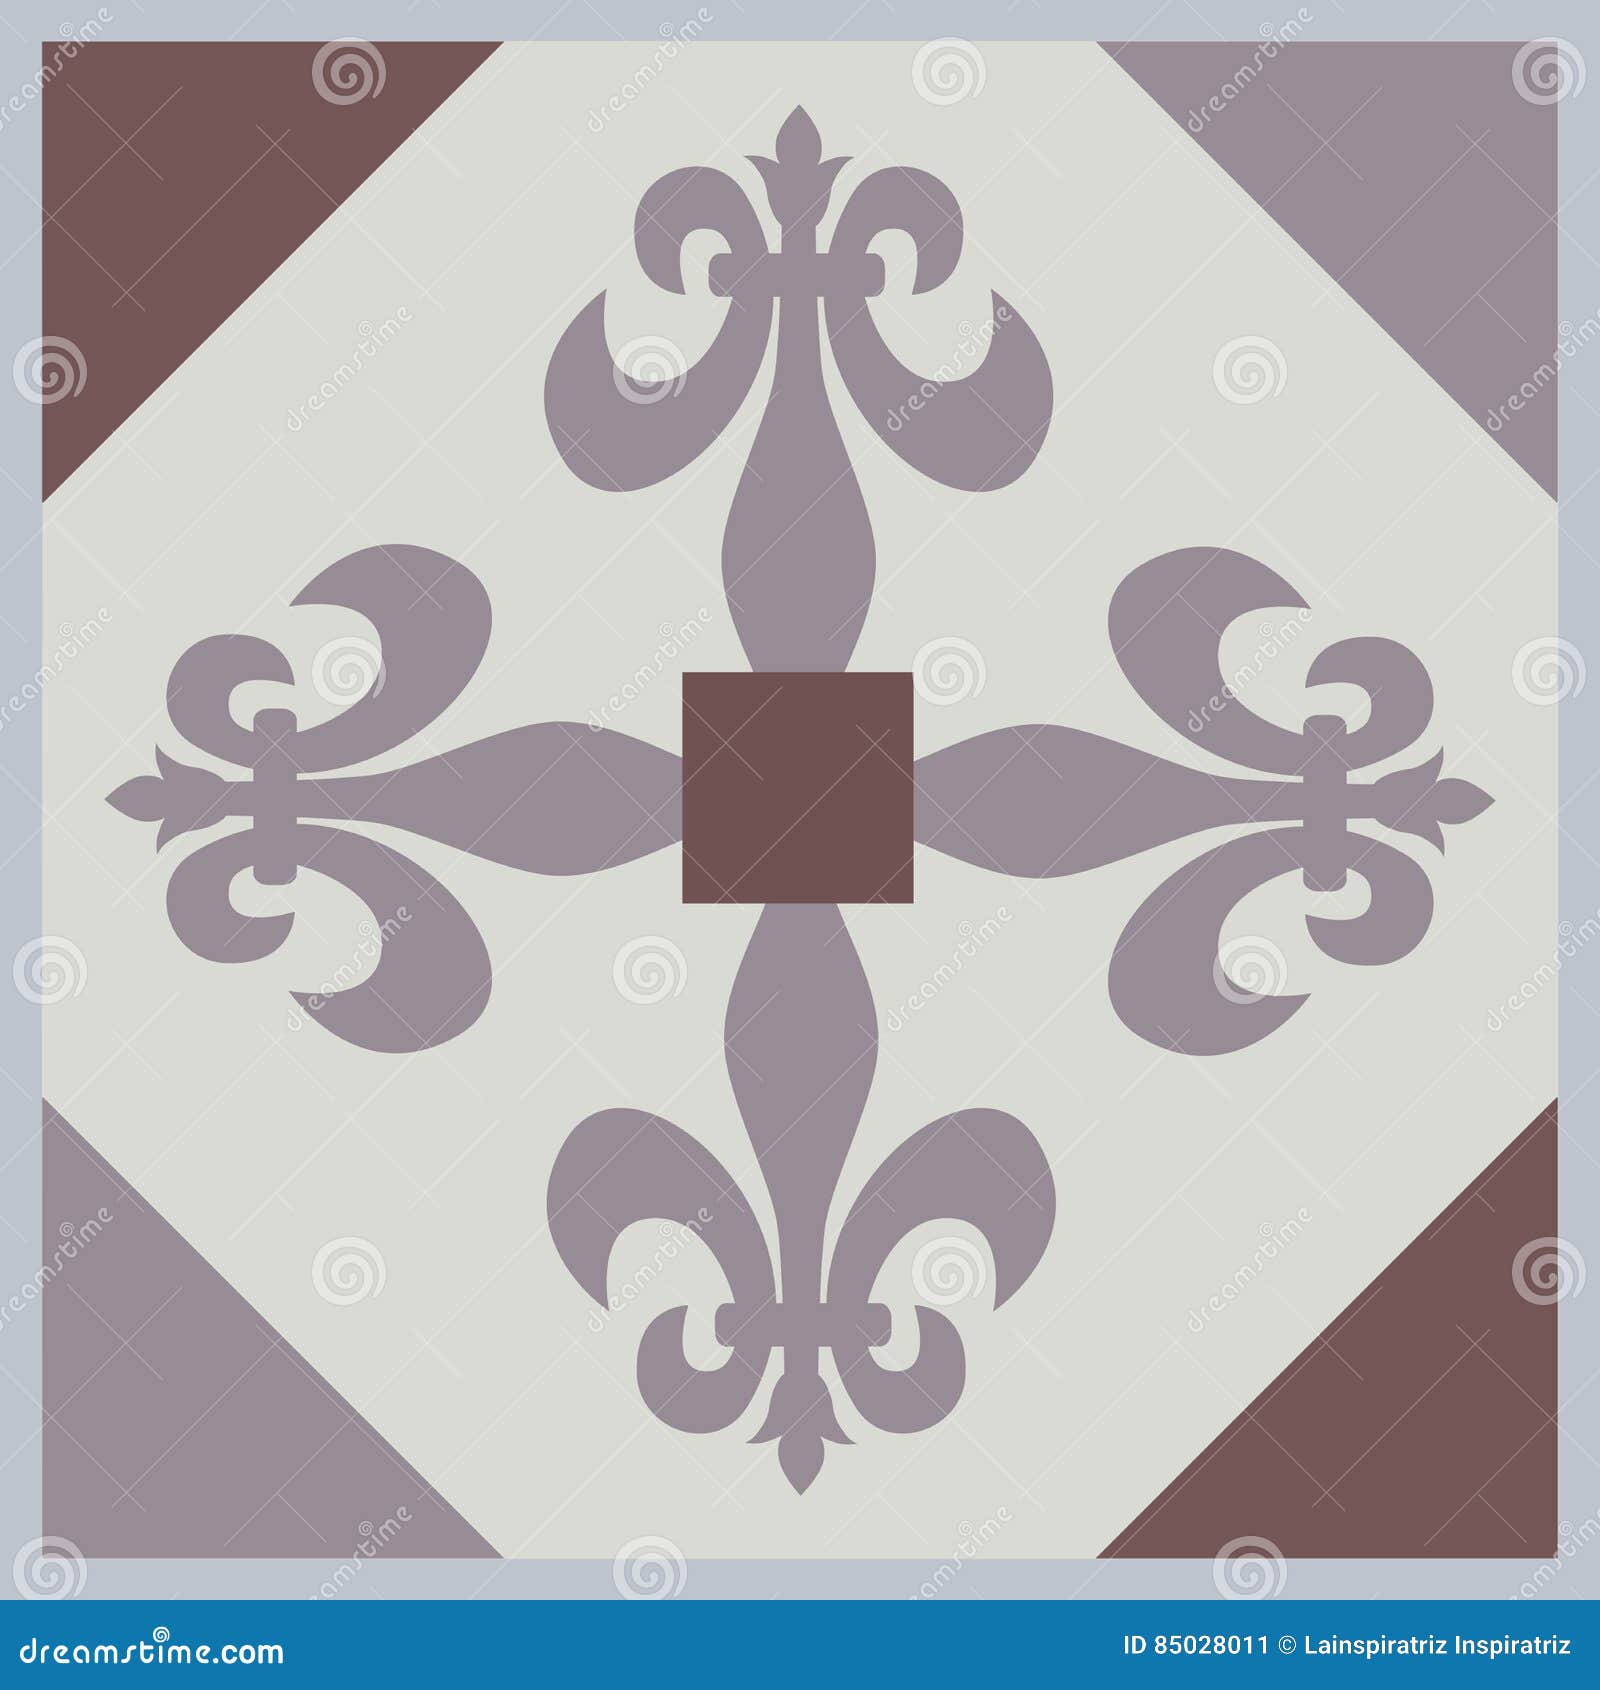 ornamental tiles pattern.